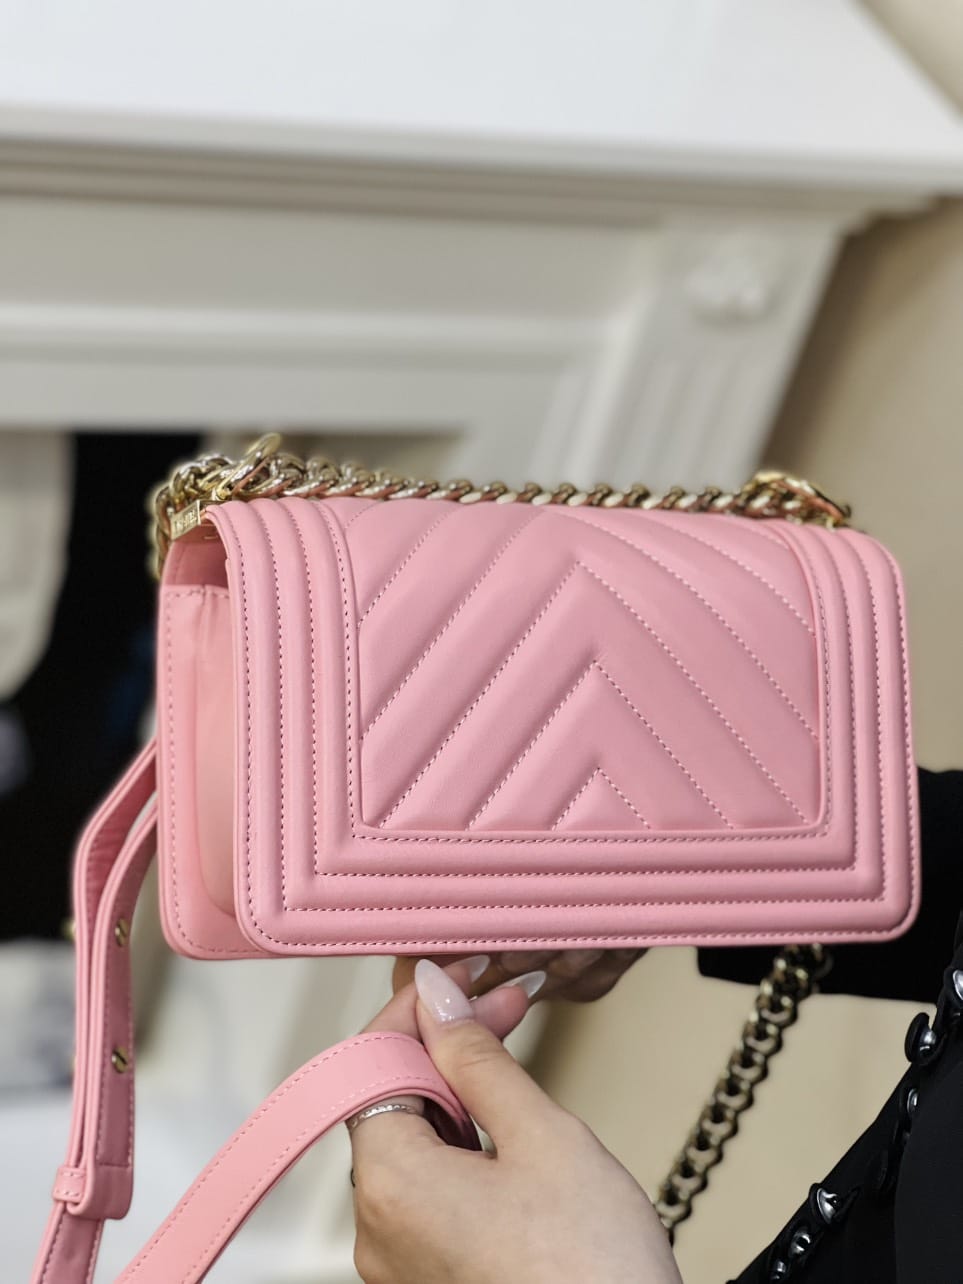 Chanel Small Light Pink Quilted Calfskin Boy Bag